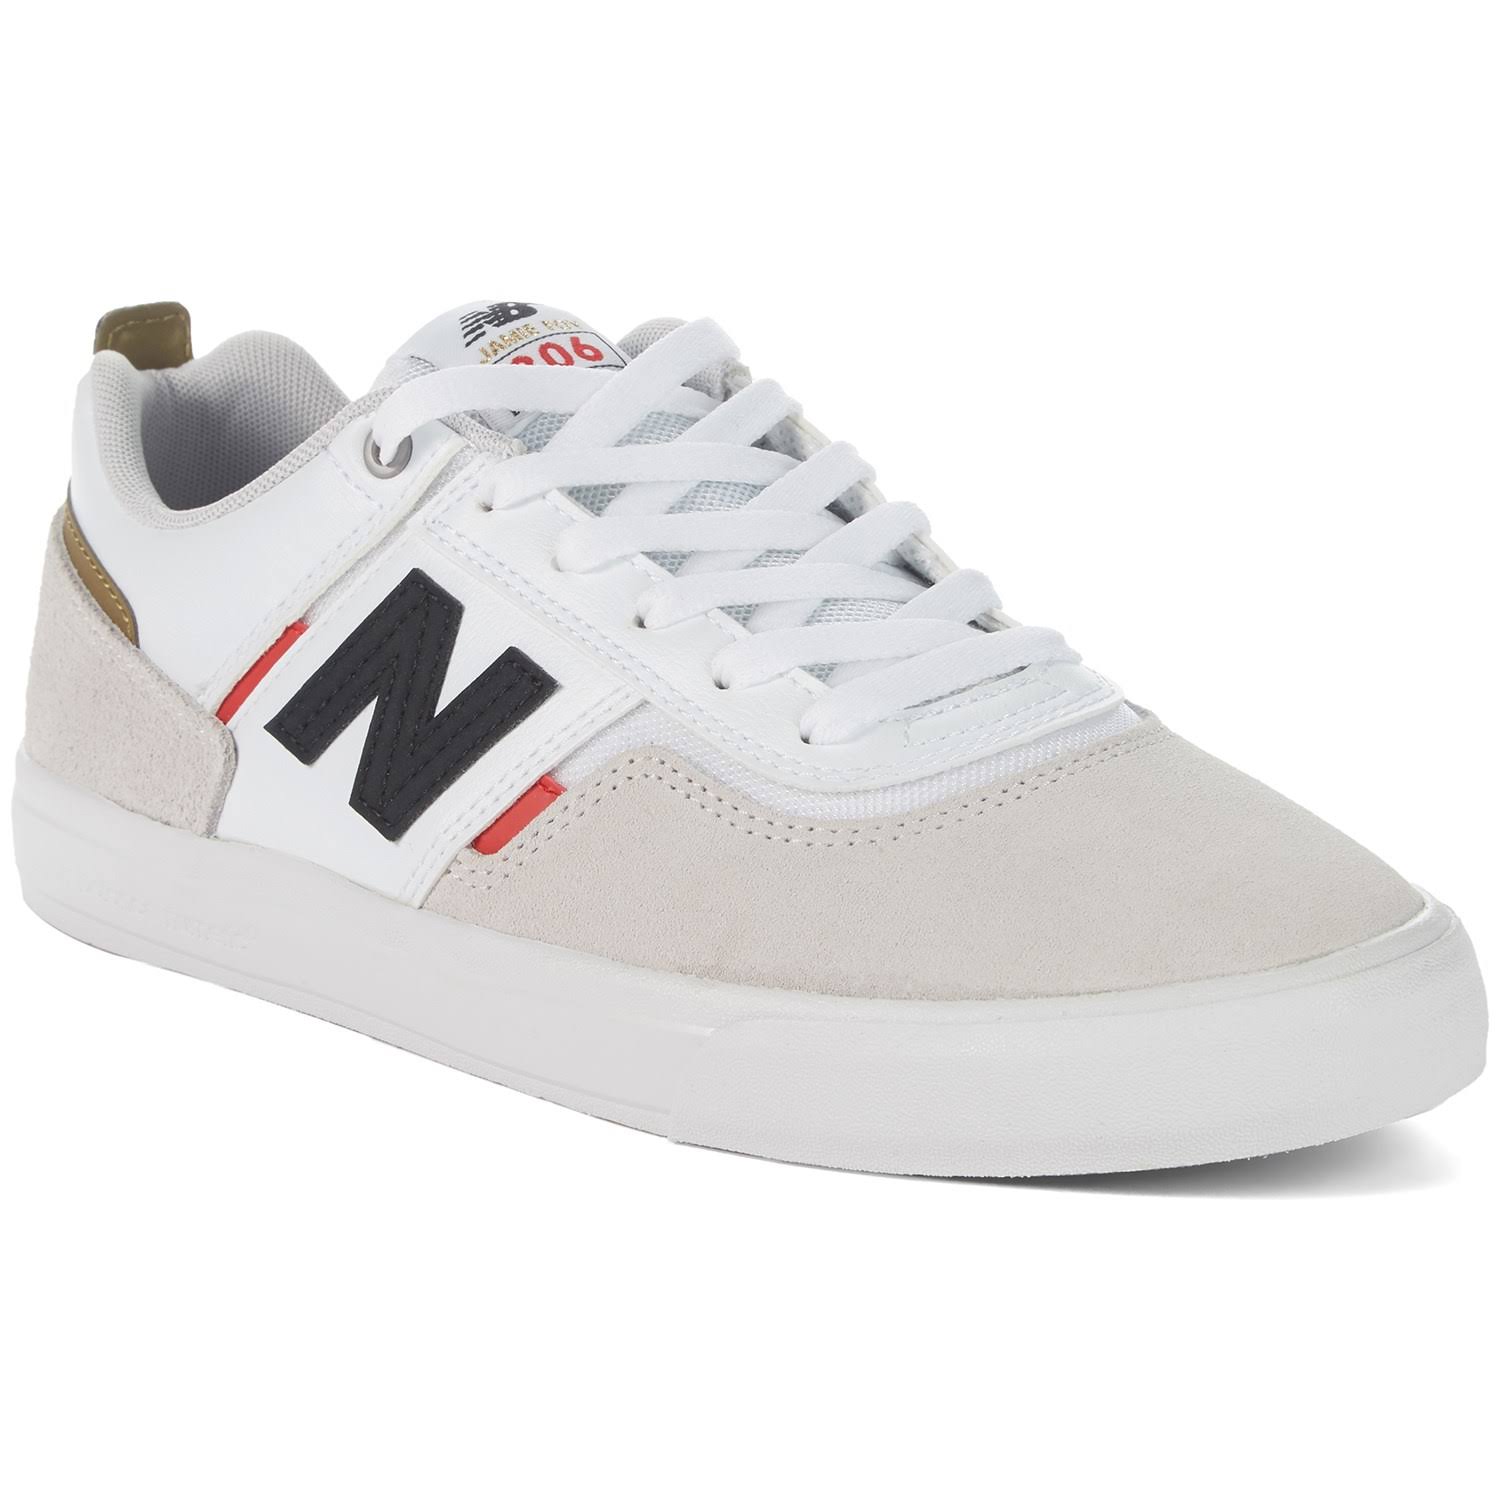 New Balance Men's Shoes - Numeric NM306 - Summer Fog/Black 8